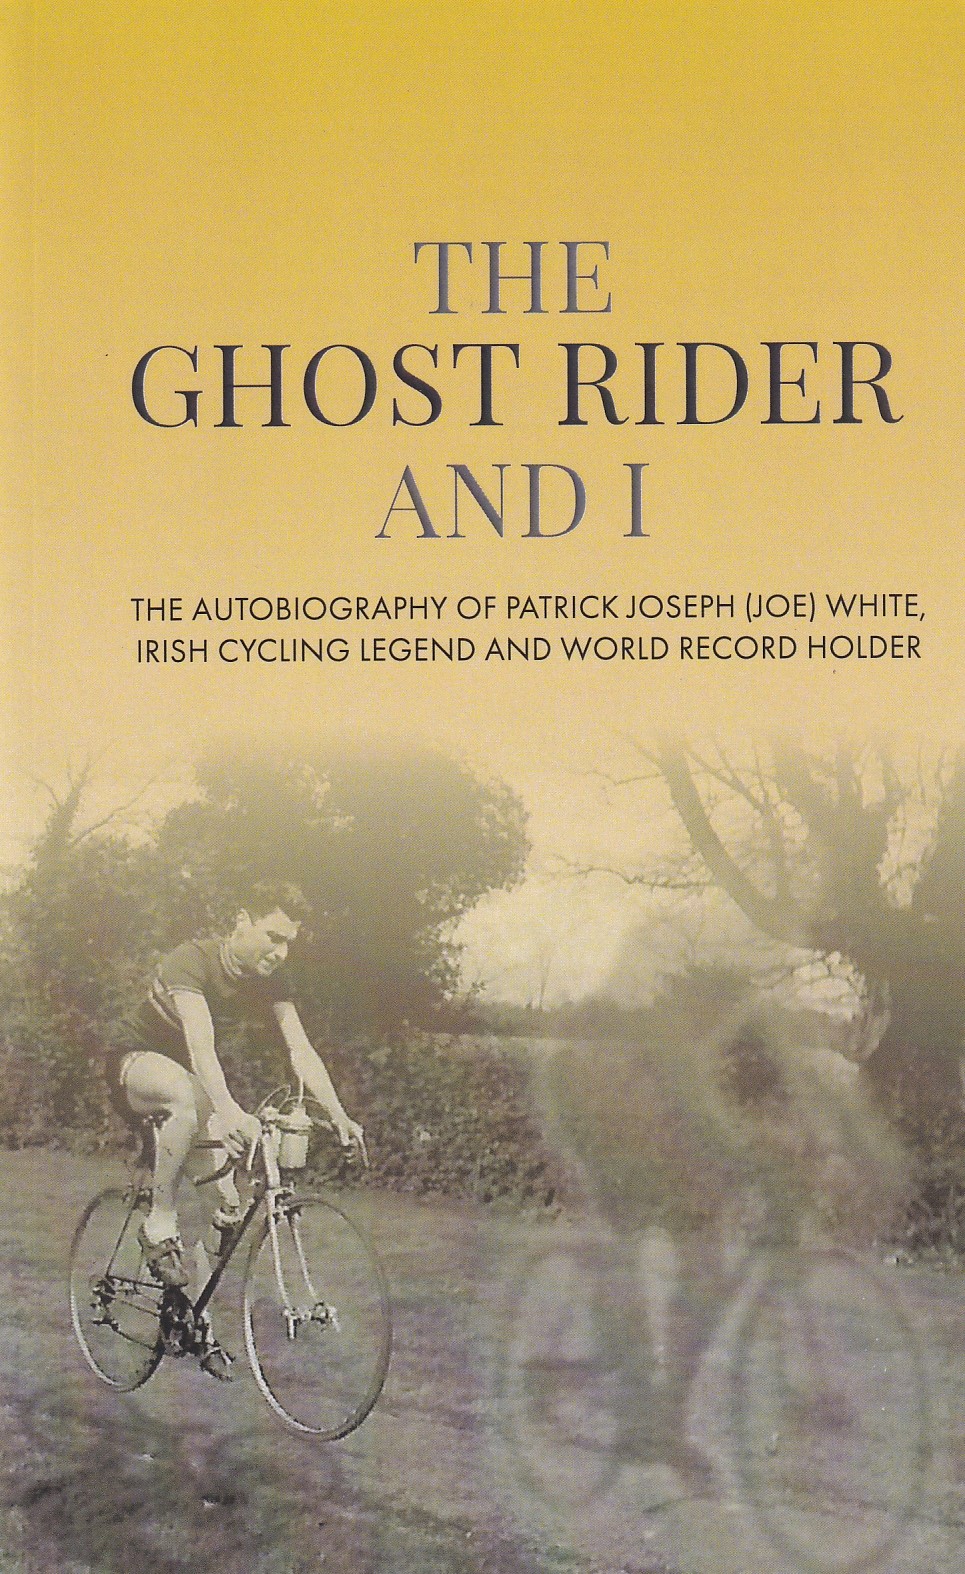 The Ghost Rider and I: The Autobiography of Patrick Joseph (Joe) White, Irish Cycling Legend and World Record Holder by Patrick Joseph White